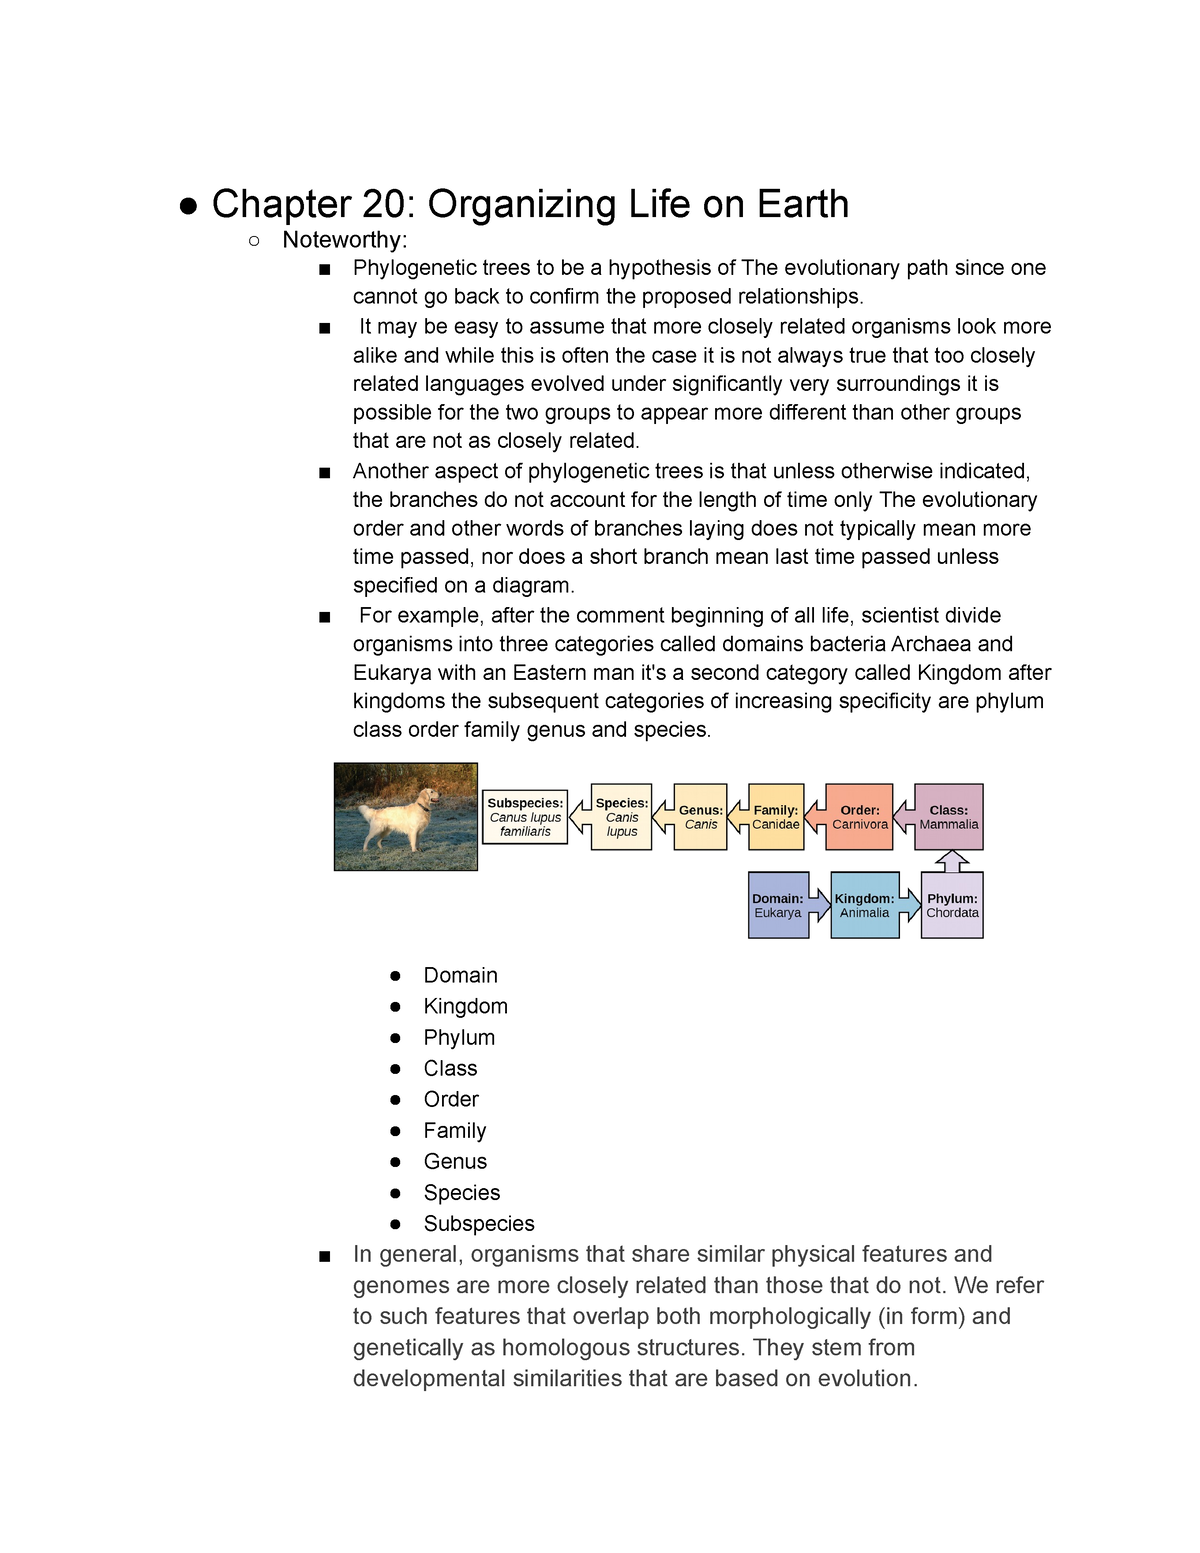 20.1 Organizing Life on Earth